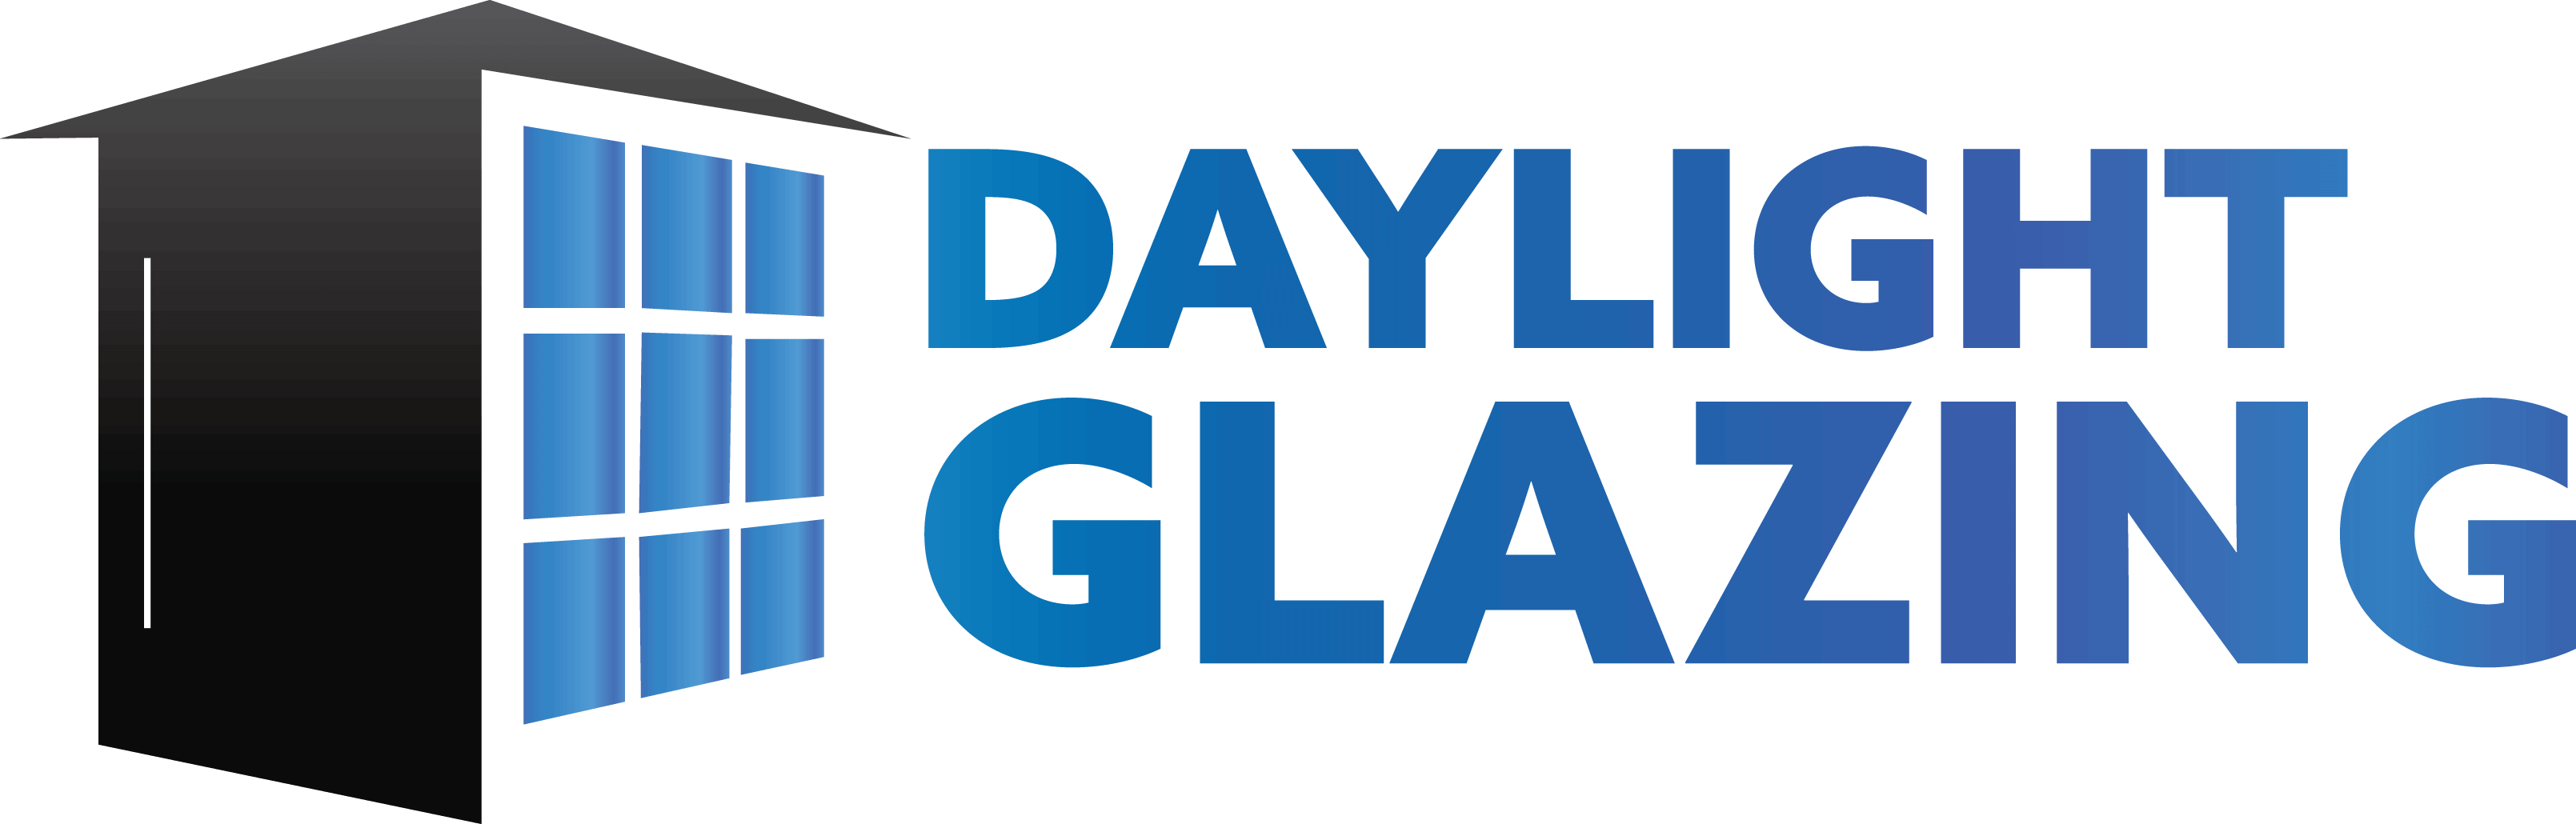 Logo of Daylight glazing limited Double Glazing In Bushey, Hertfordshire